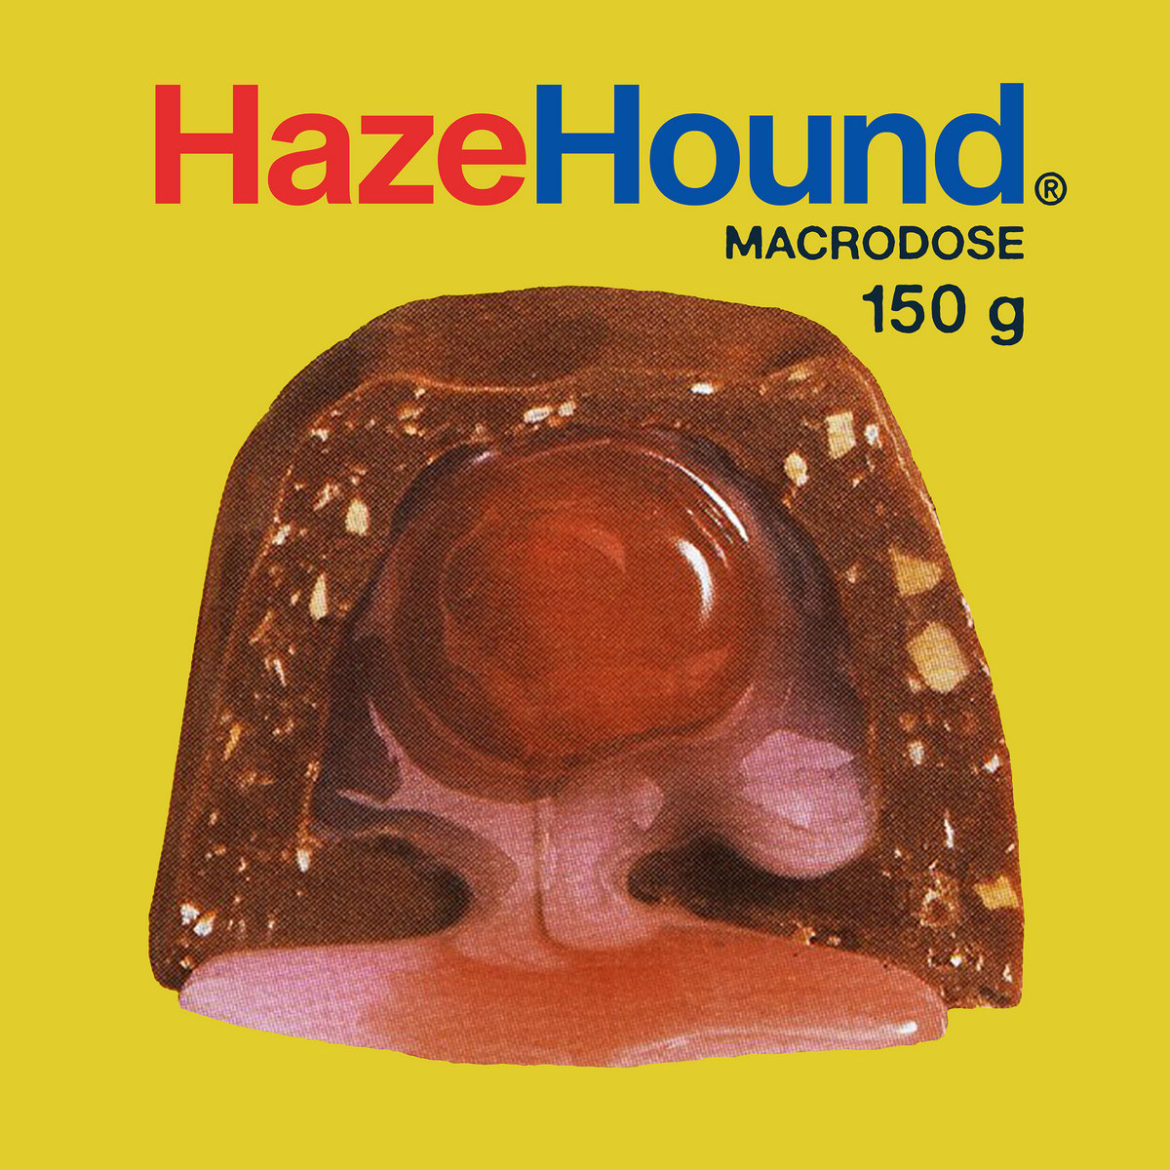 HazeHound "Macrodose"